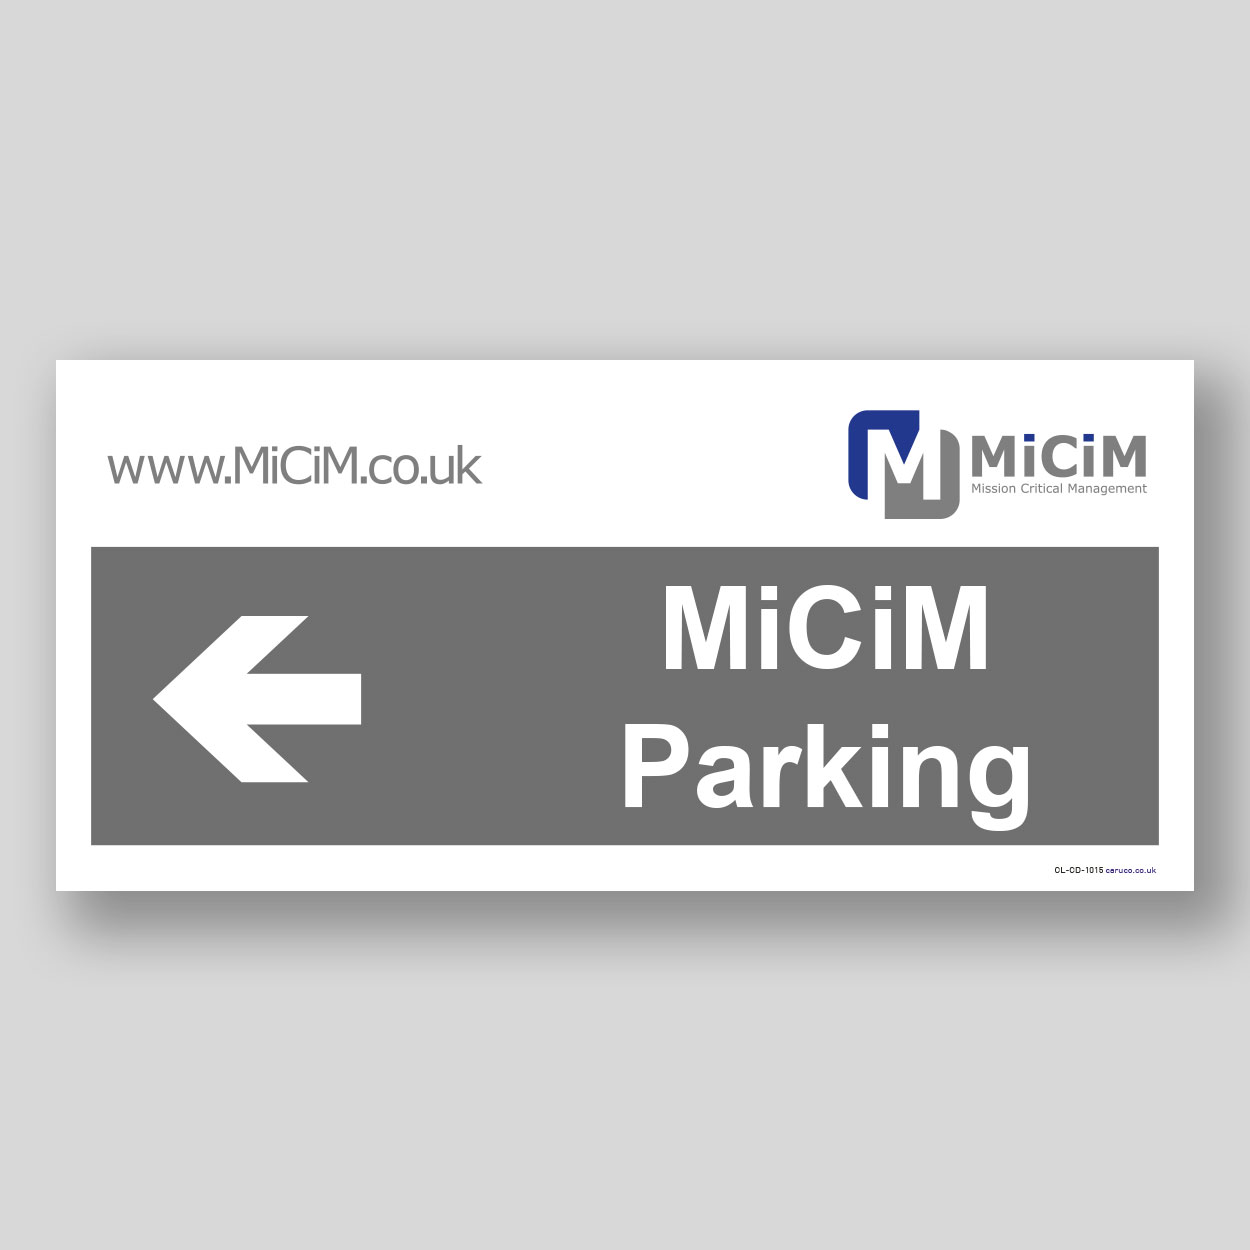 CL-CD-1015 MiCiM parking with left arrow